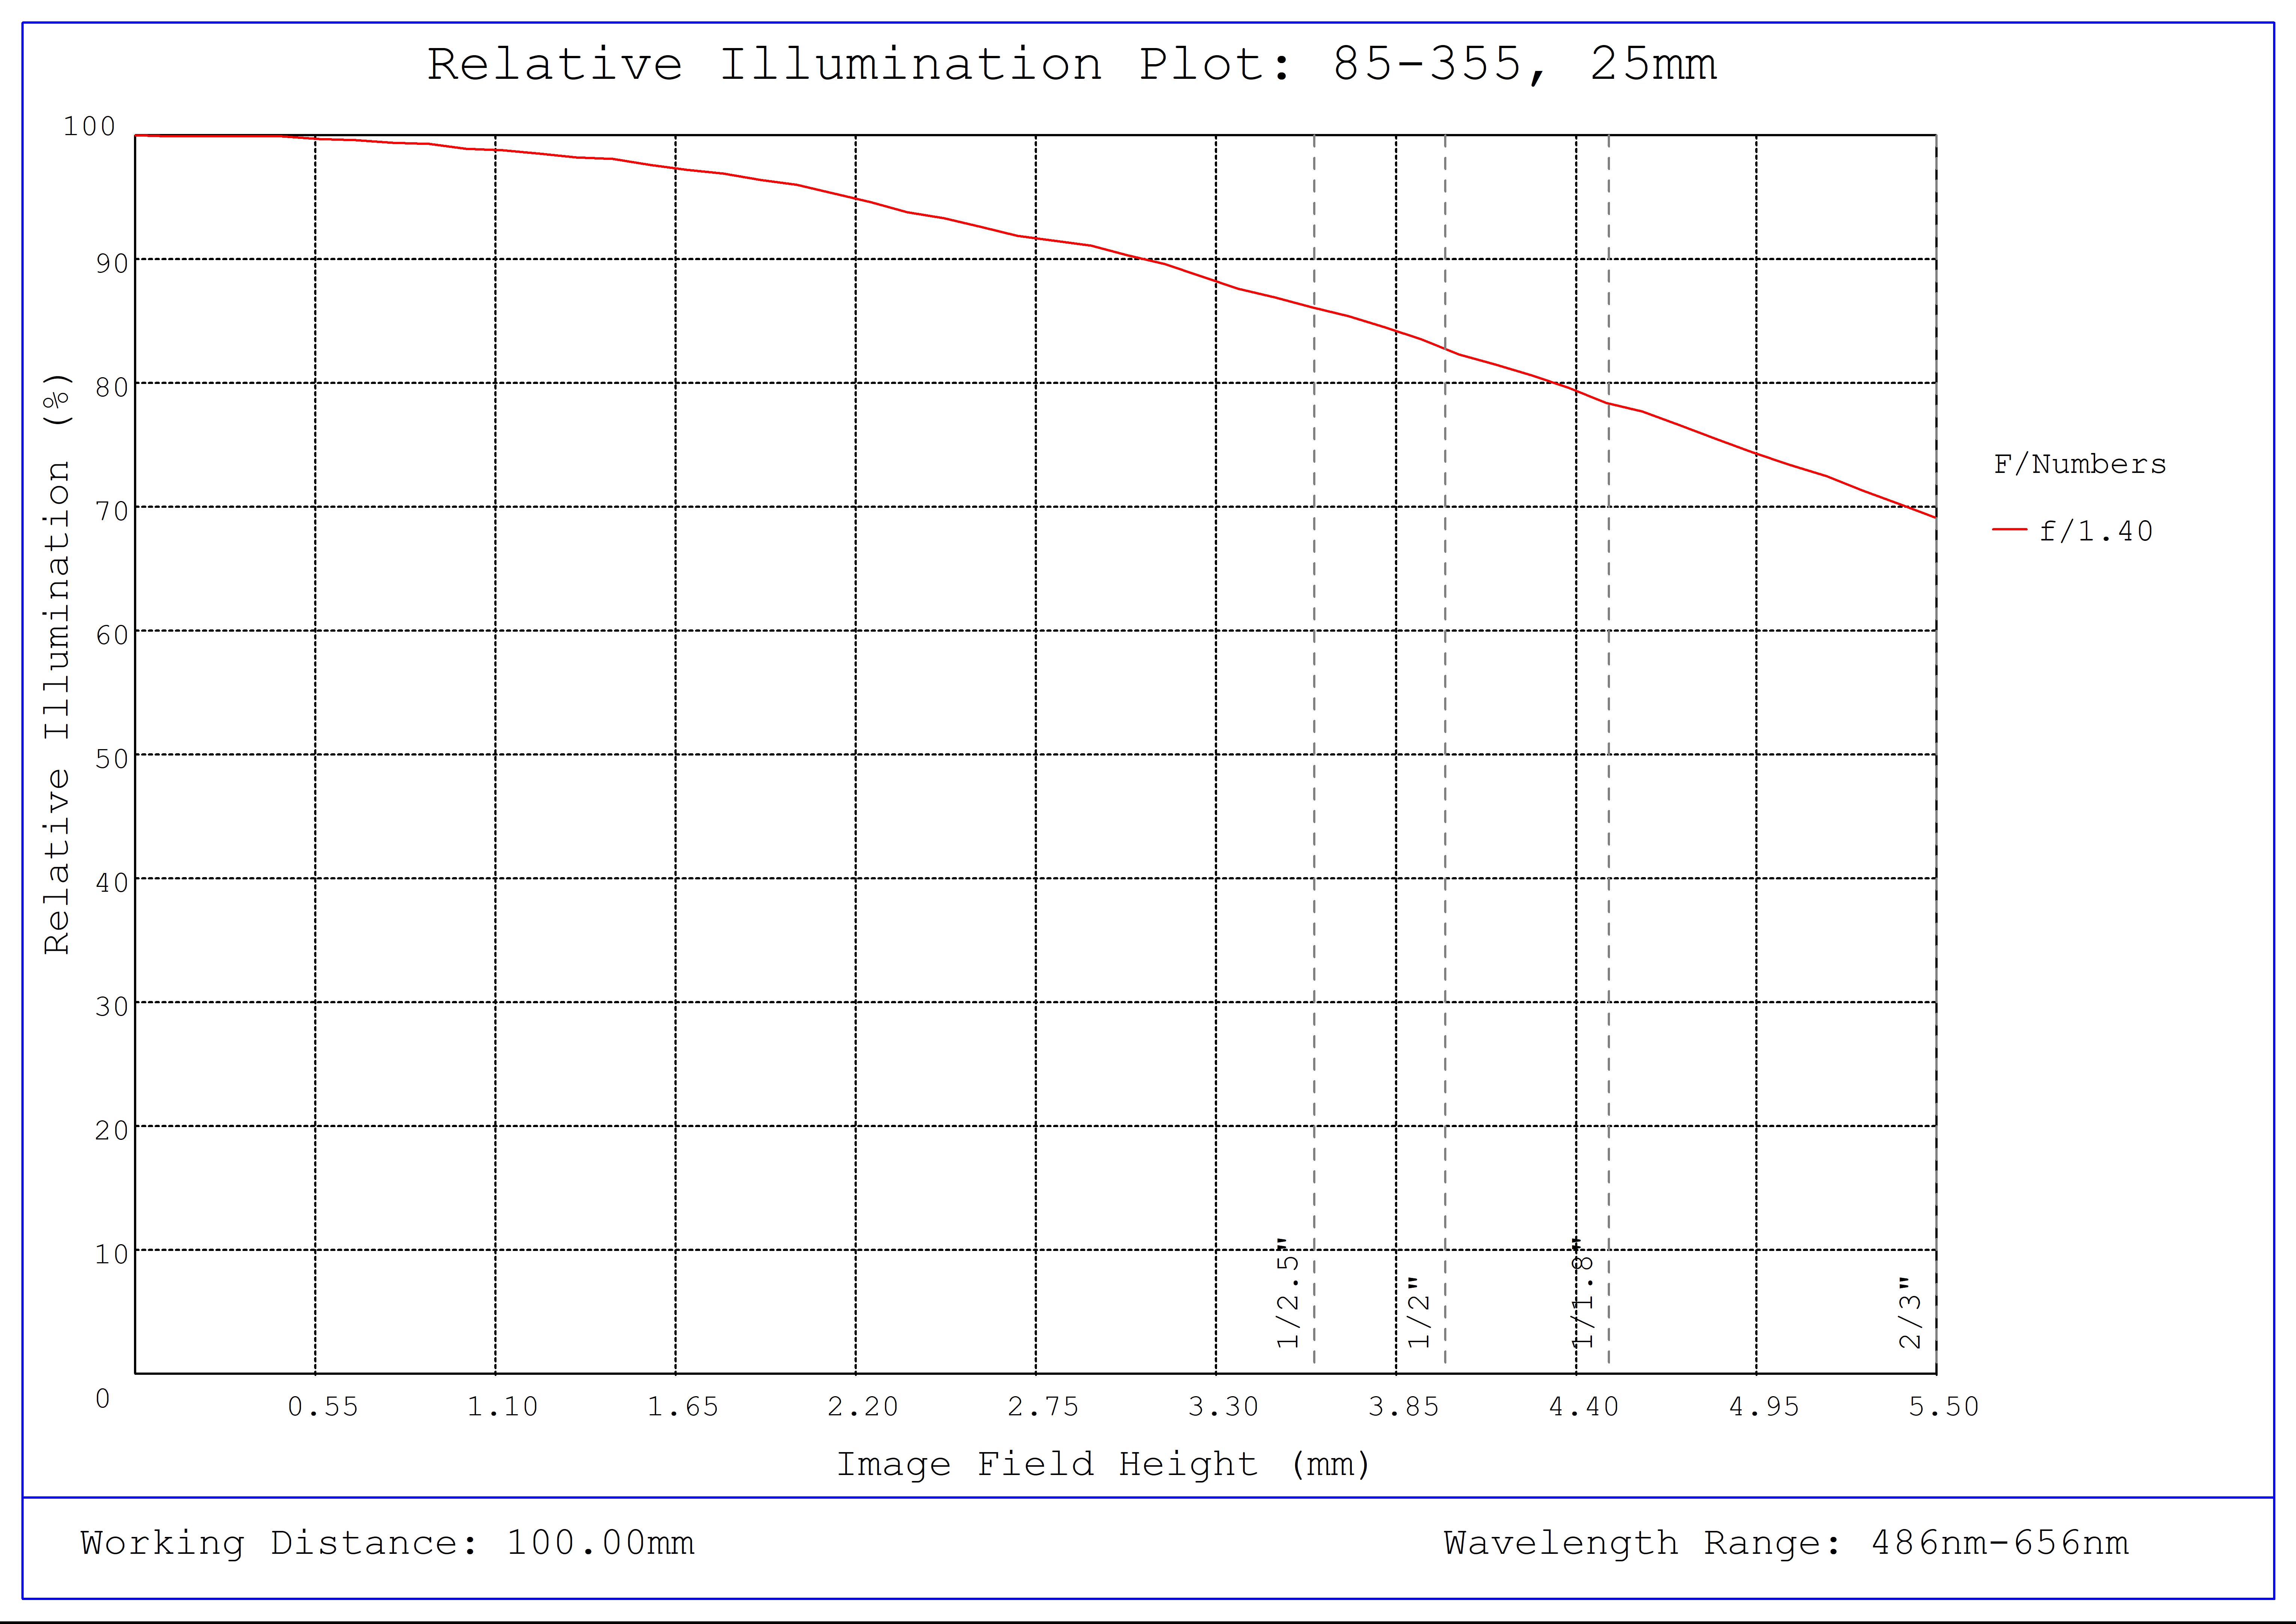 #85-355, 25mm, f/1.4 Ci Series Fixed Focal Length Lens, Relative Illumination Plot